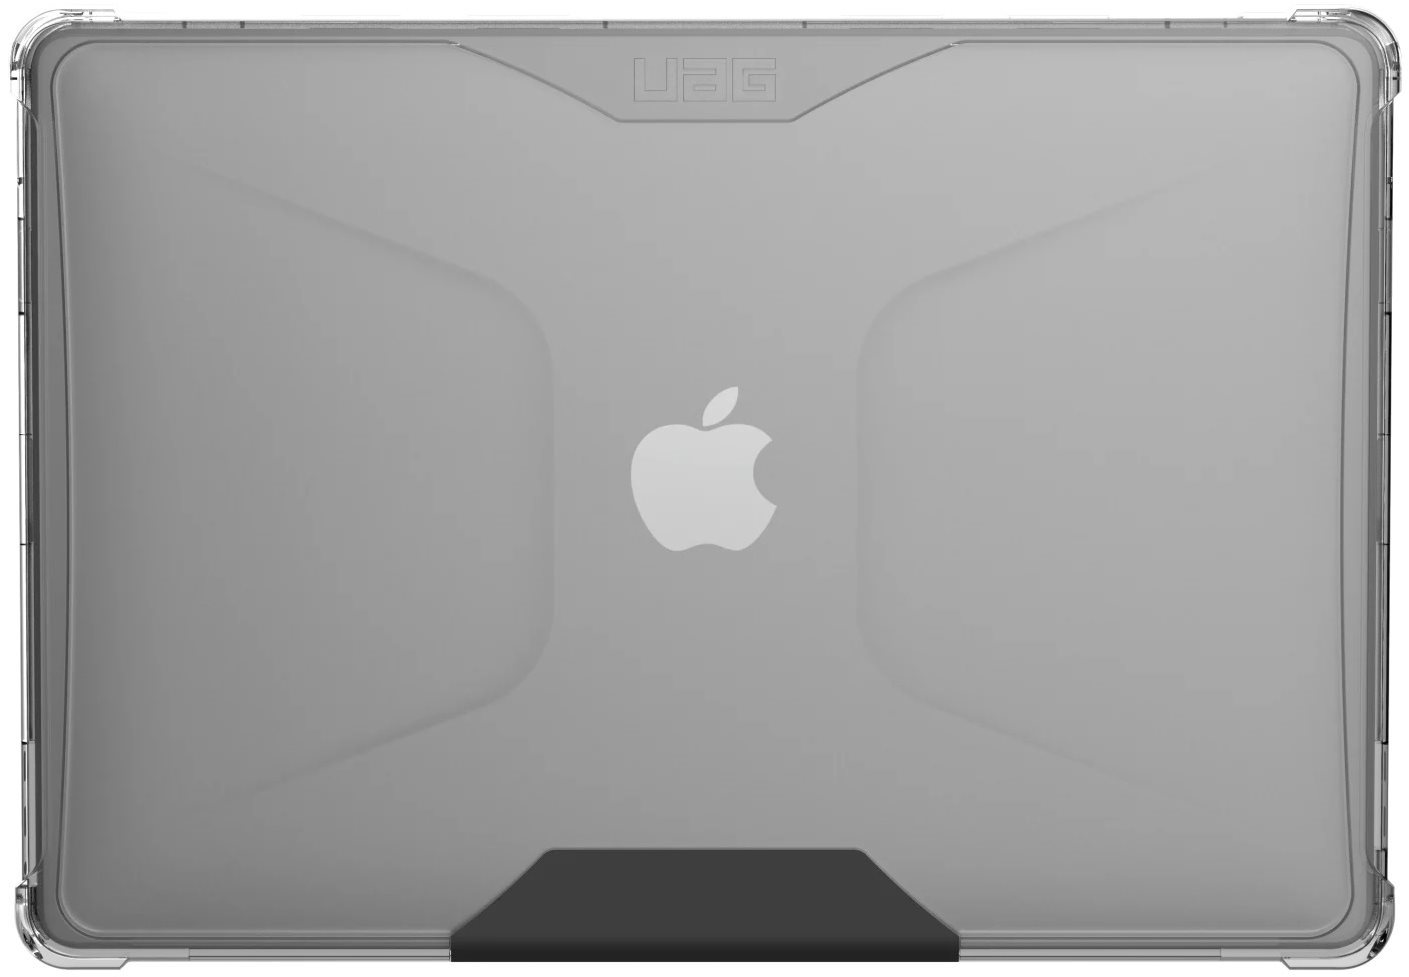 Laptop Case UAG Plyo Ice Clear MacBook Pro 13